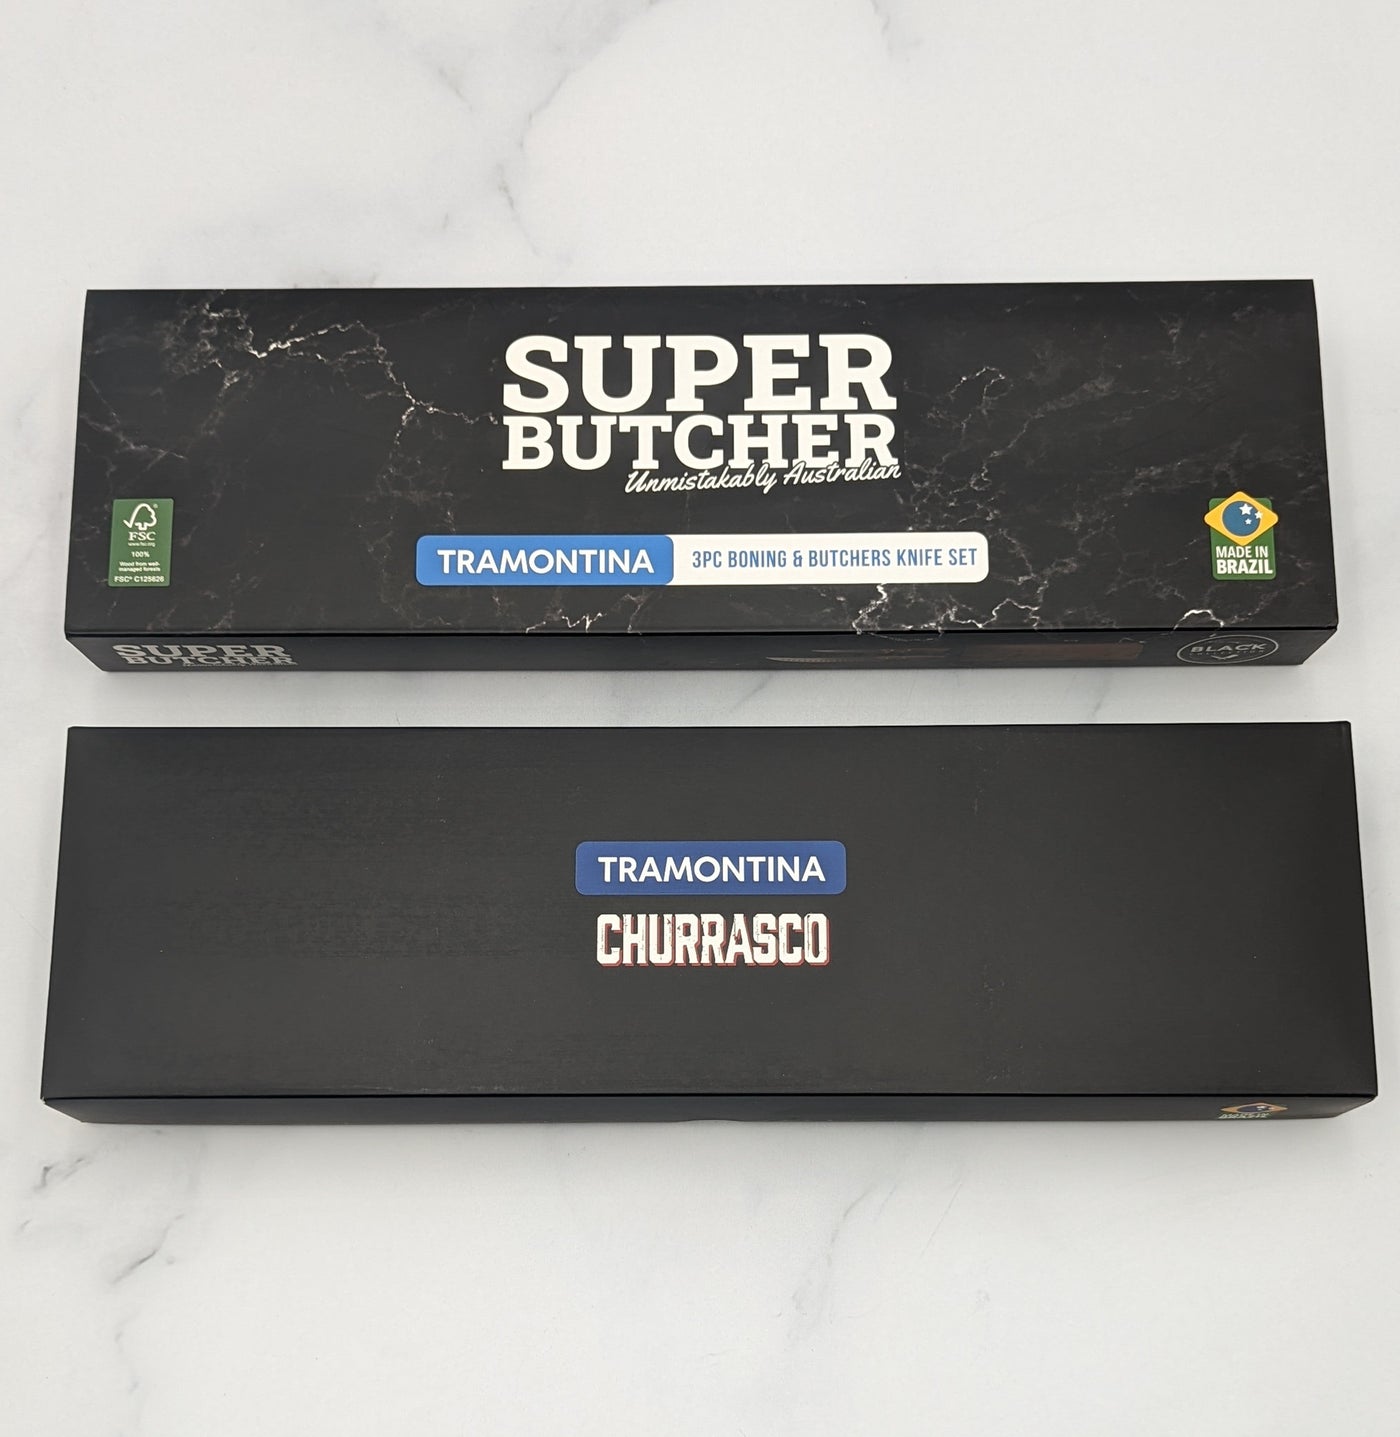 Super Butcher X Tramontina 3pc Boning & Butcher's Knife Set